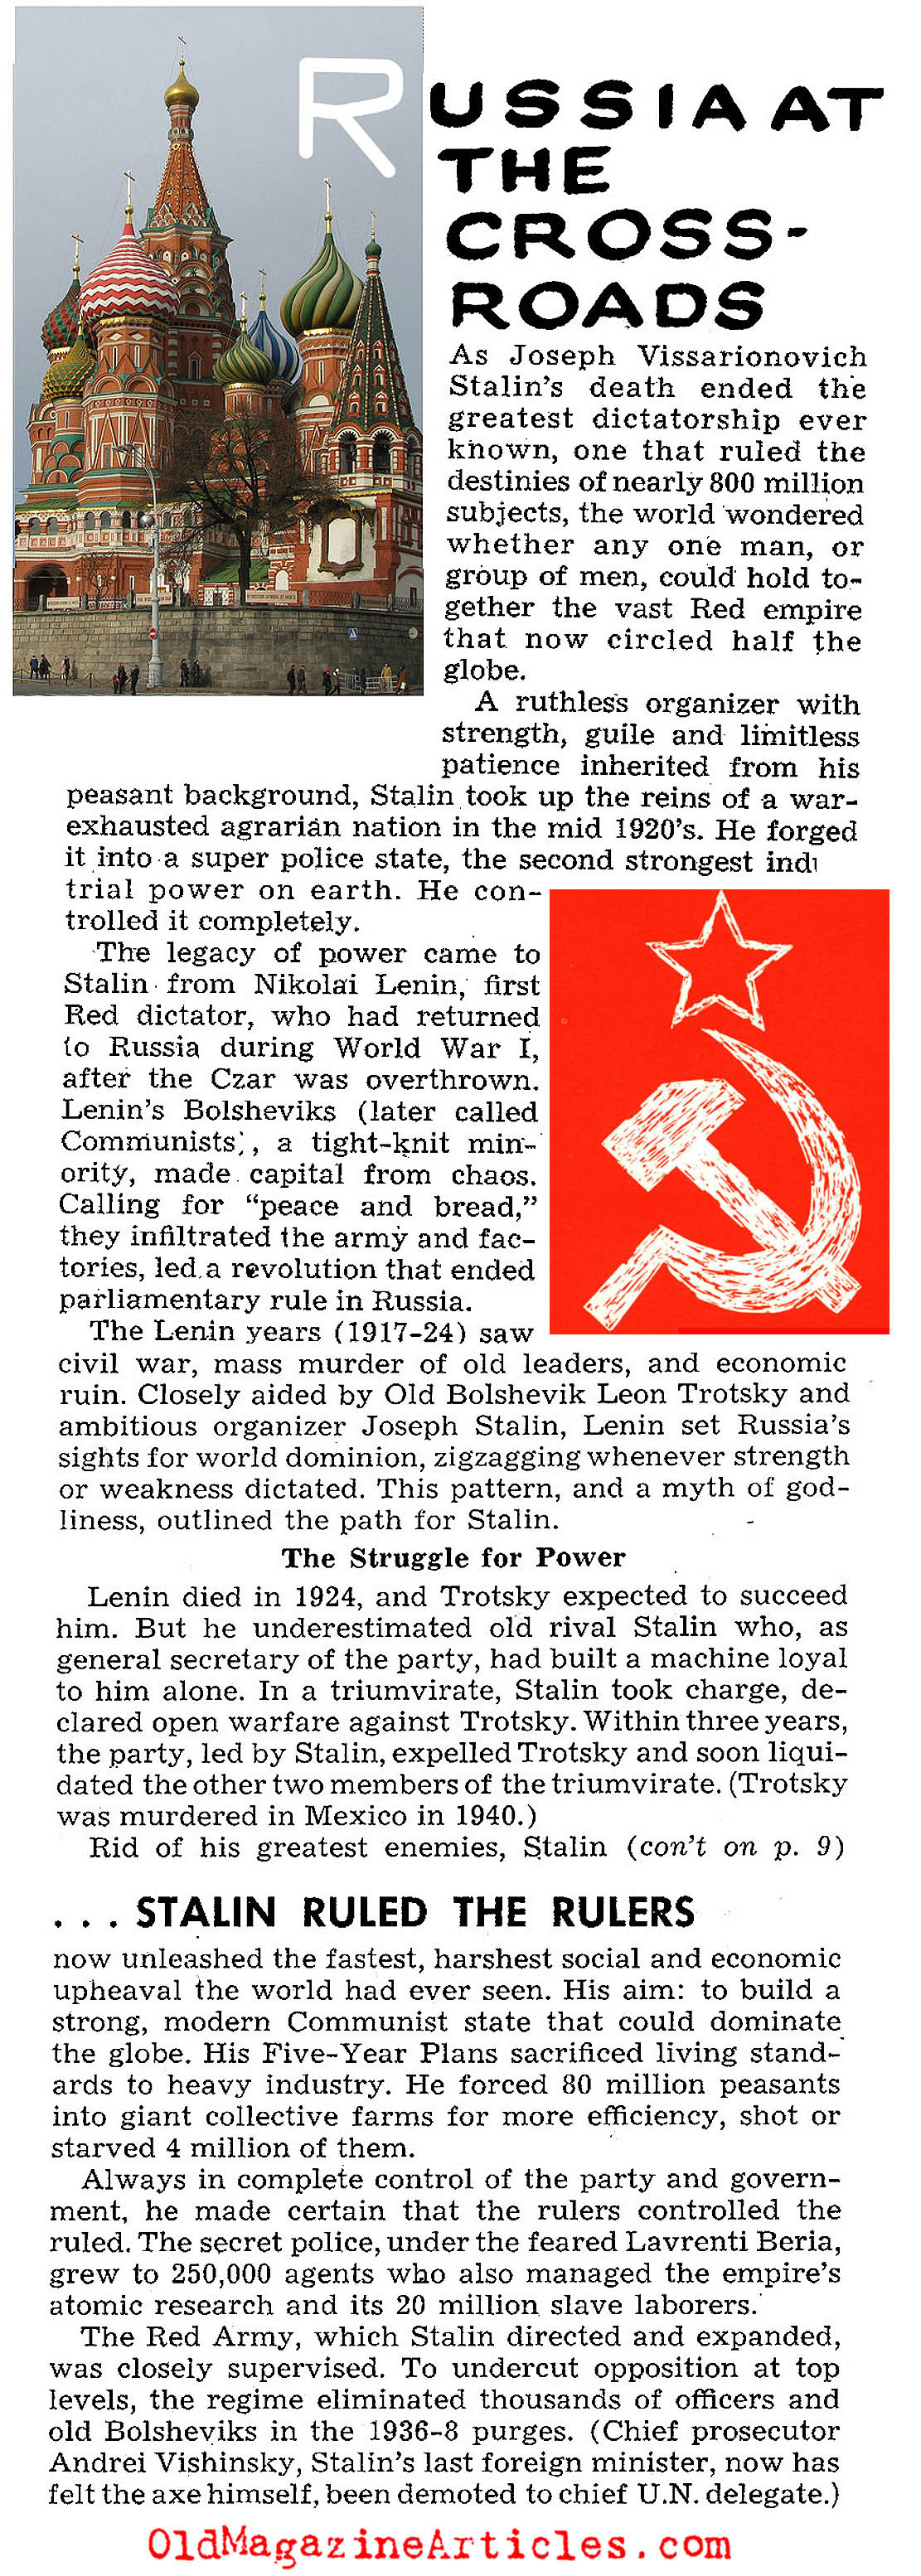 Stalin's Rule Summarized (Quick Magazine, 1953)